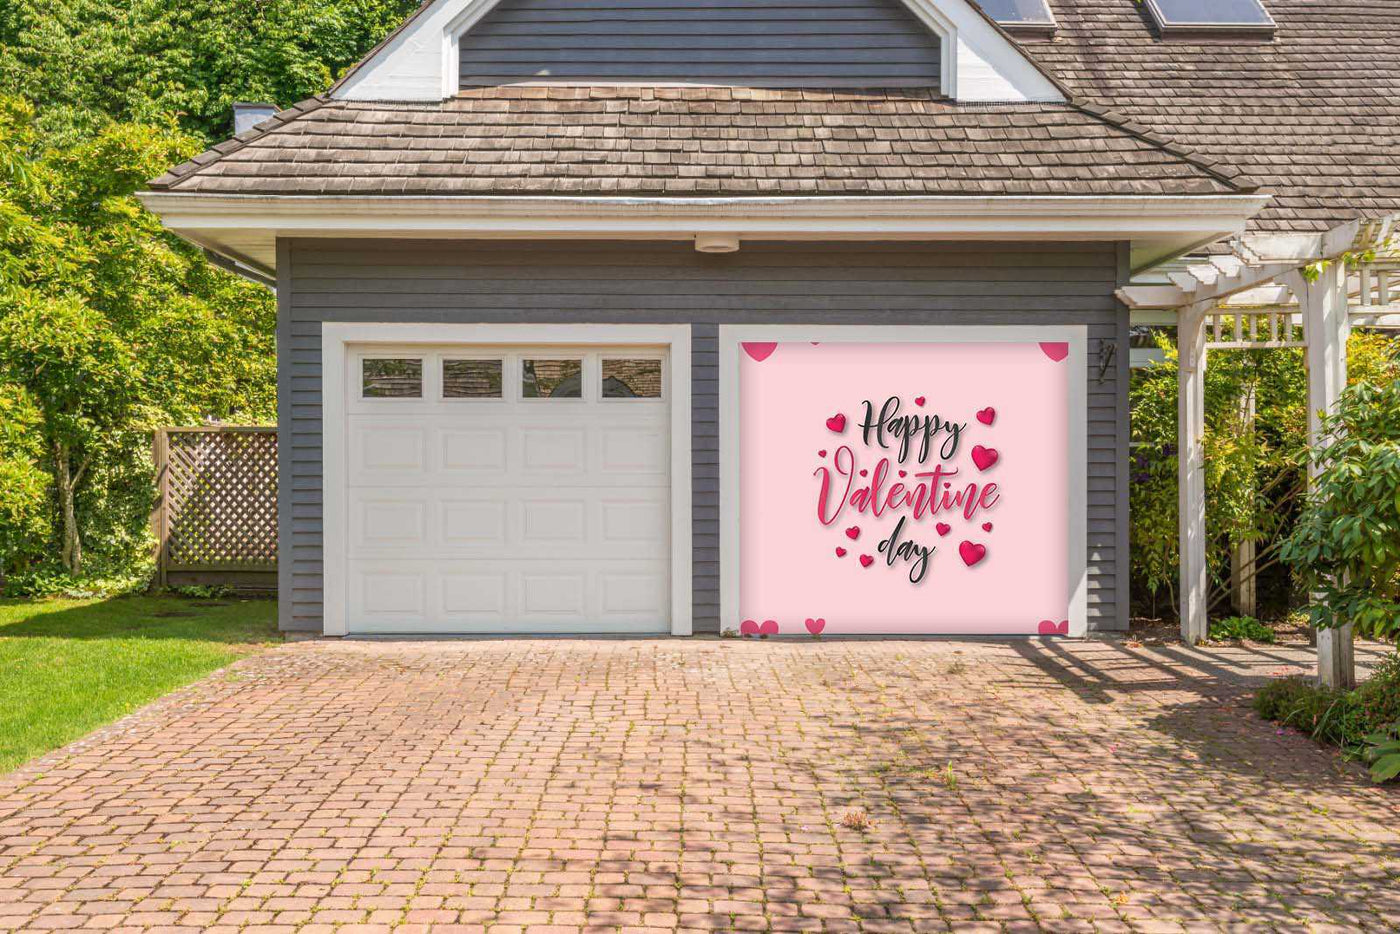 Happy Valentines Day Garage Door Cover Wrap Mural Home Decoration (Design #2)